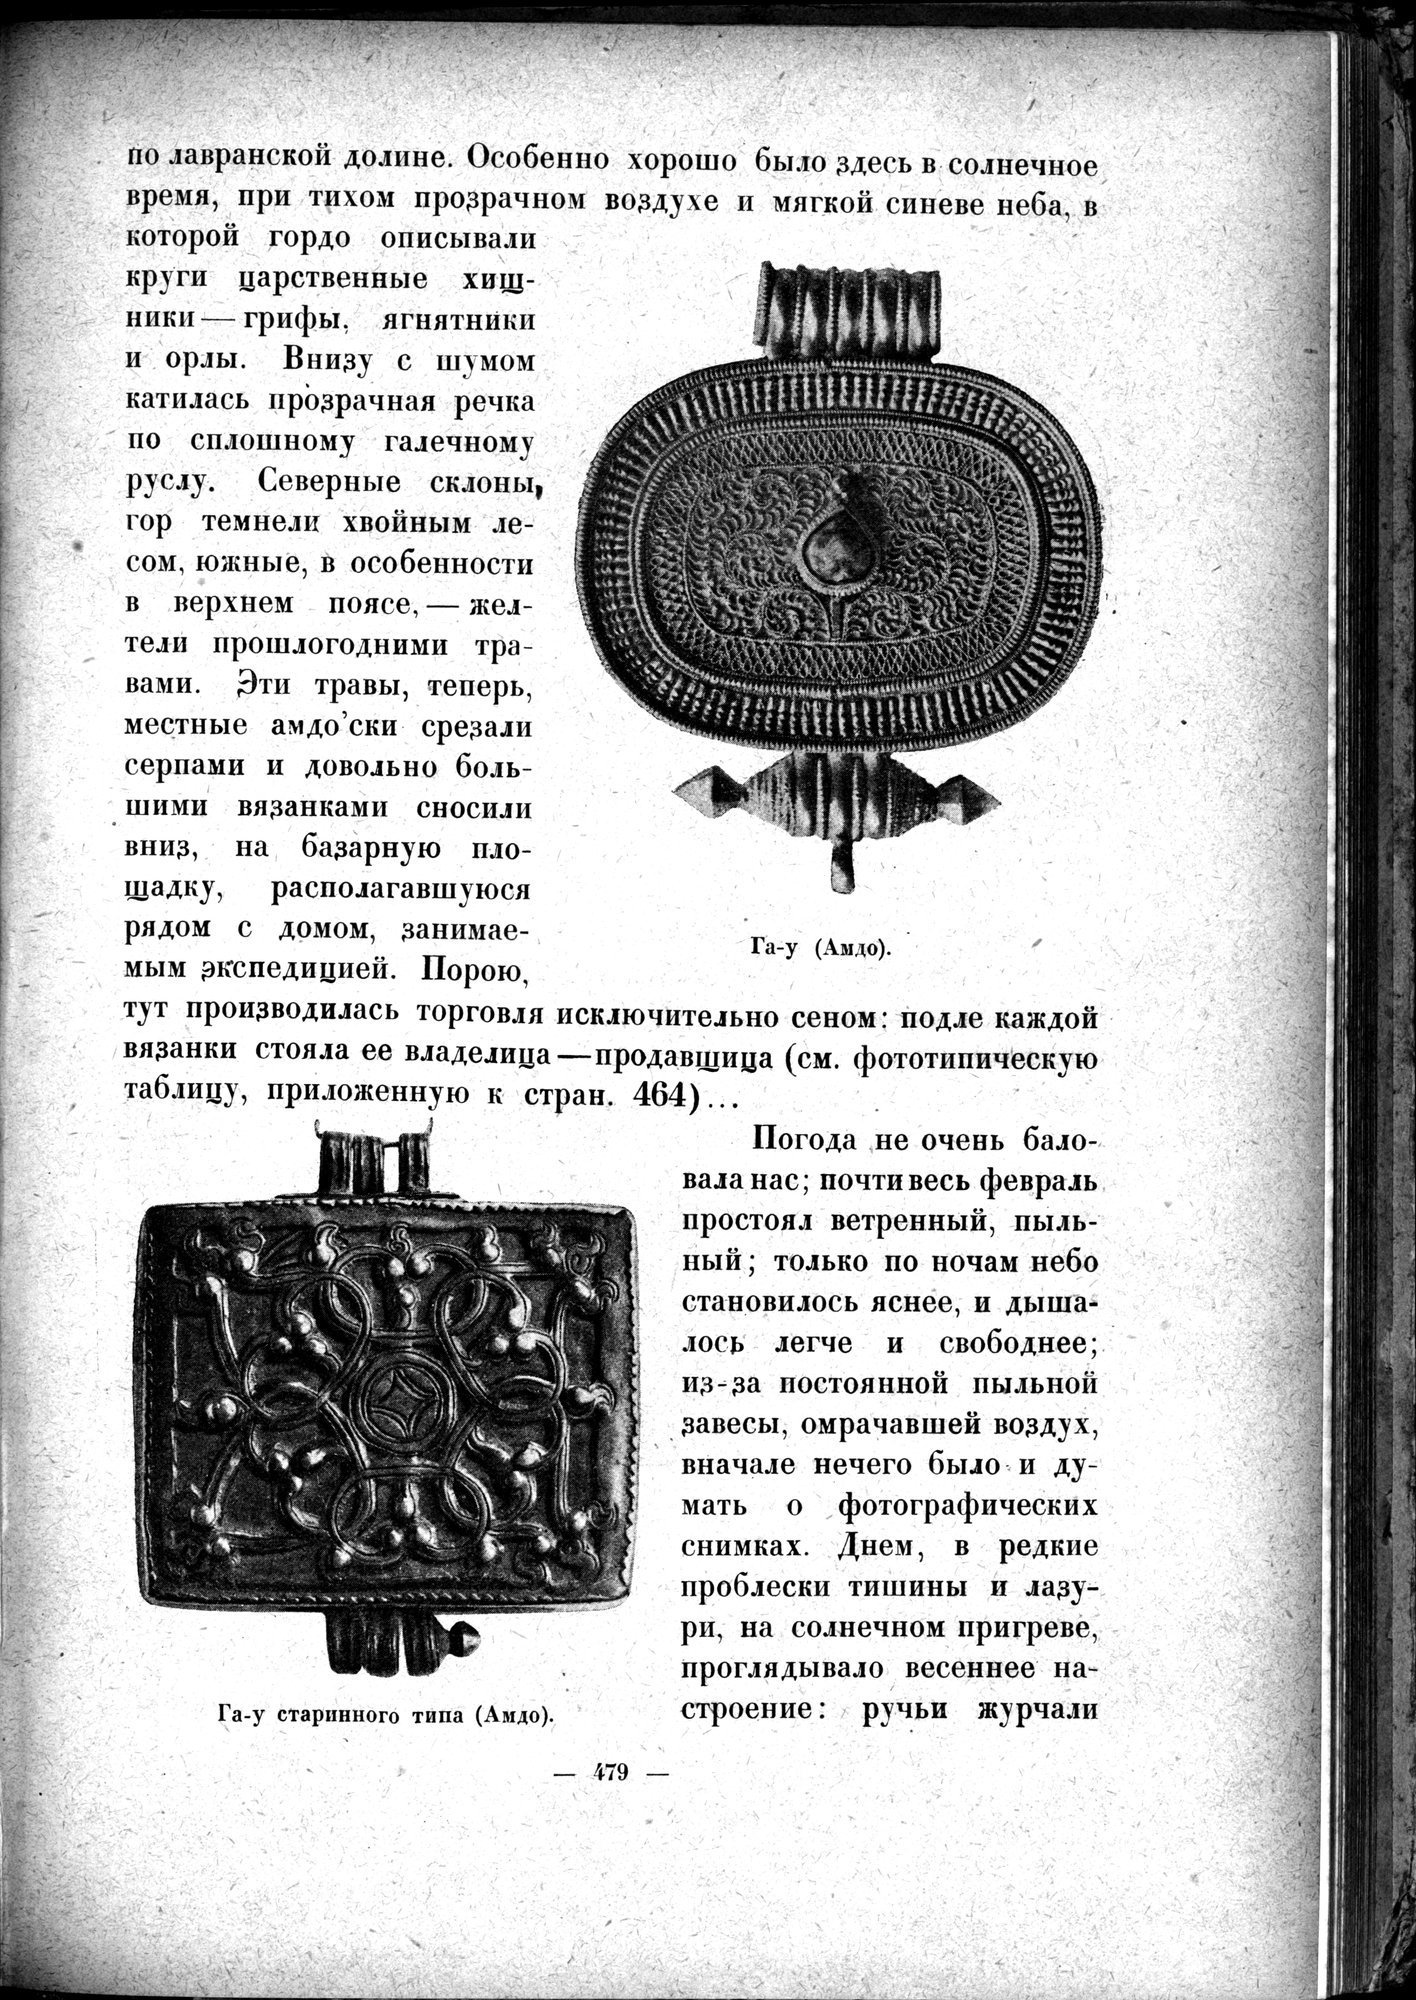 Mongoliya i Amdo i mertby gorod Khara-Khoto : vol.1 / Page 547 (Grayscale High Resolution Image)